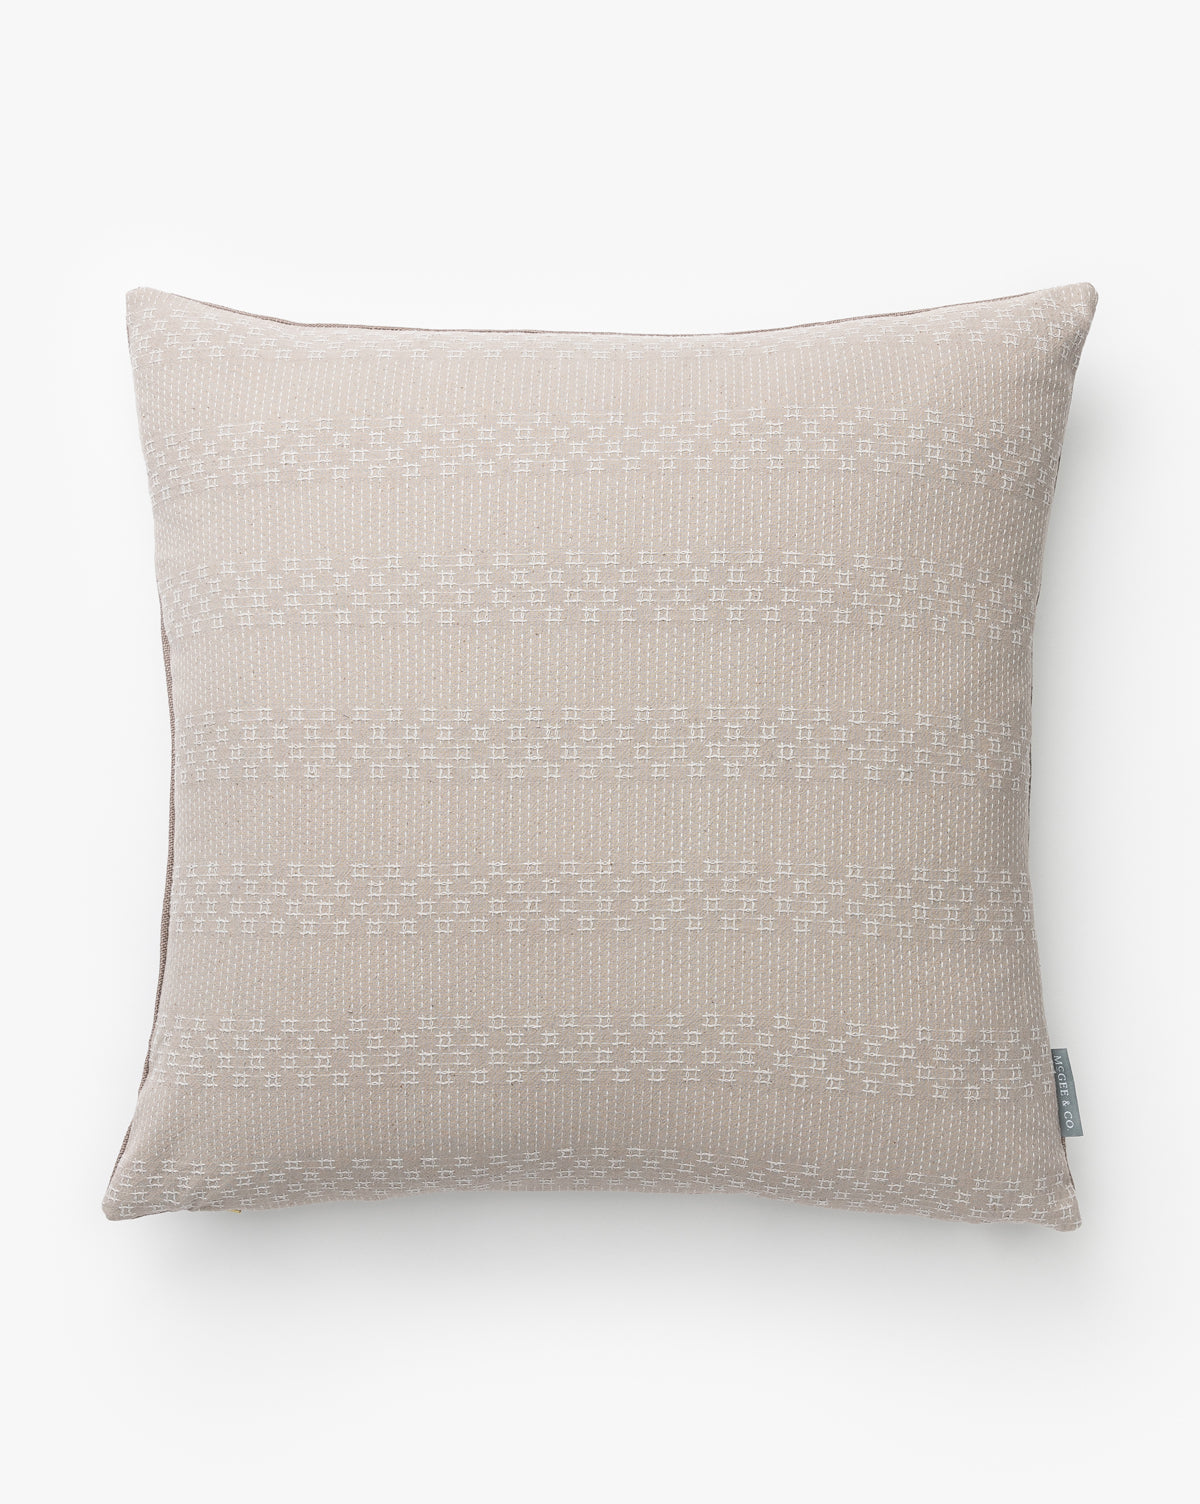 Tangren, Vintage Gray Crosshatch Pillow Cover No. 2